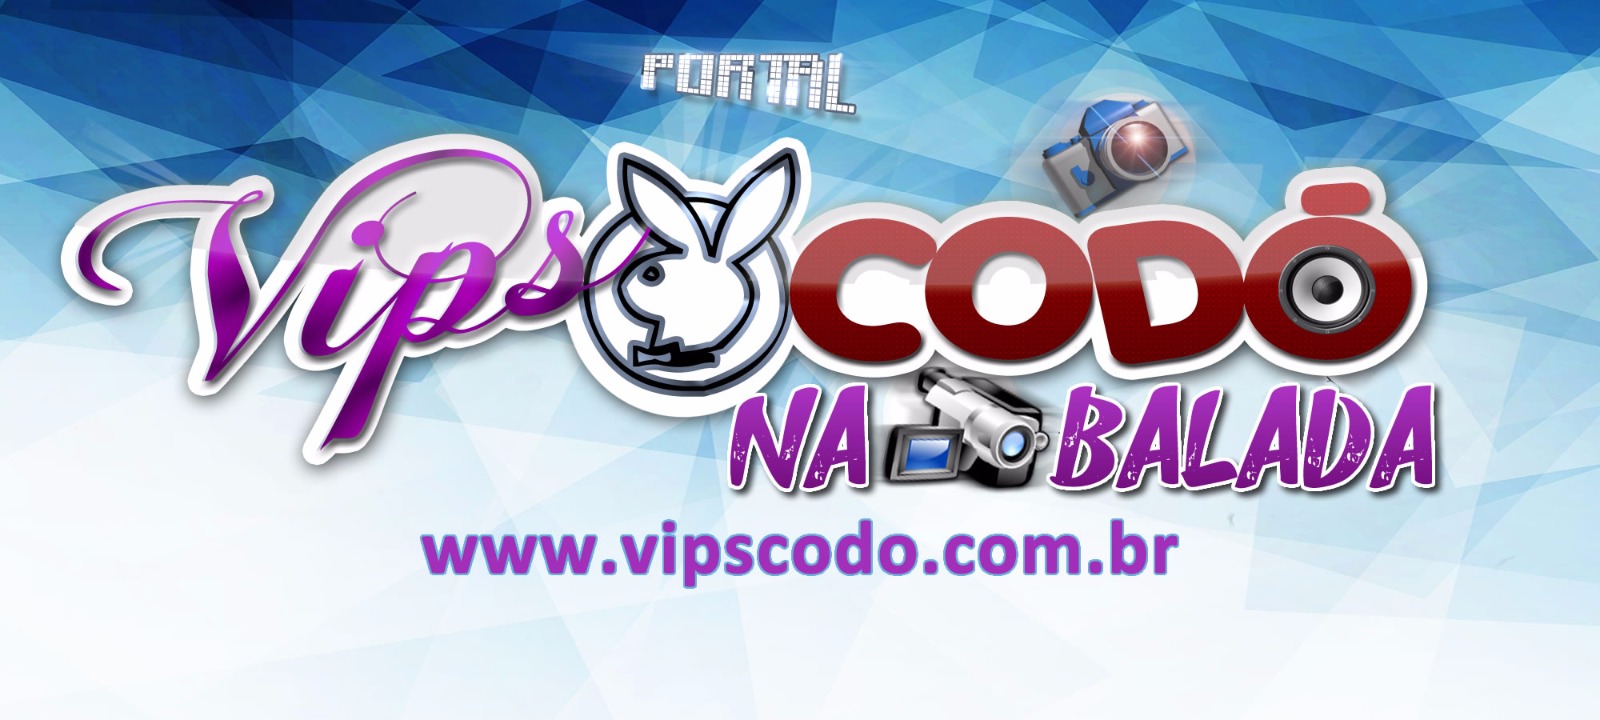 Acesse : www.vipscodo.com.br